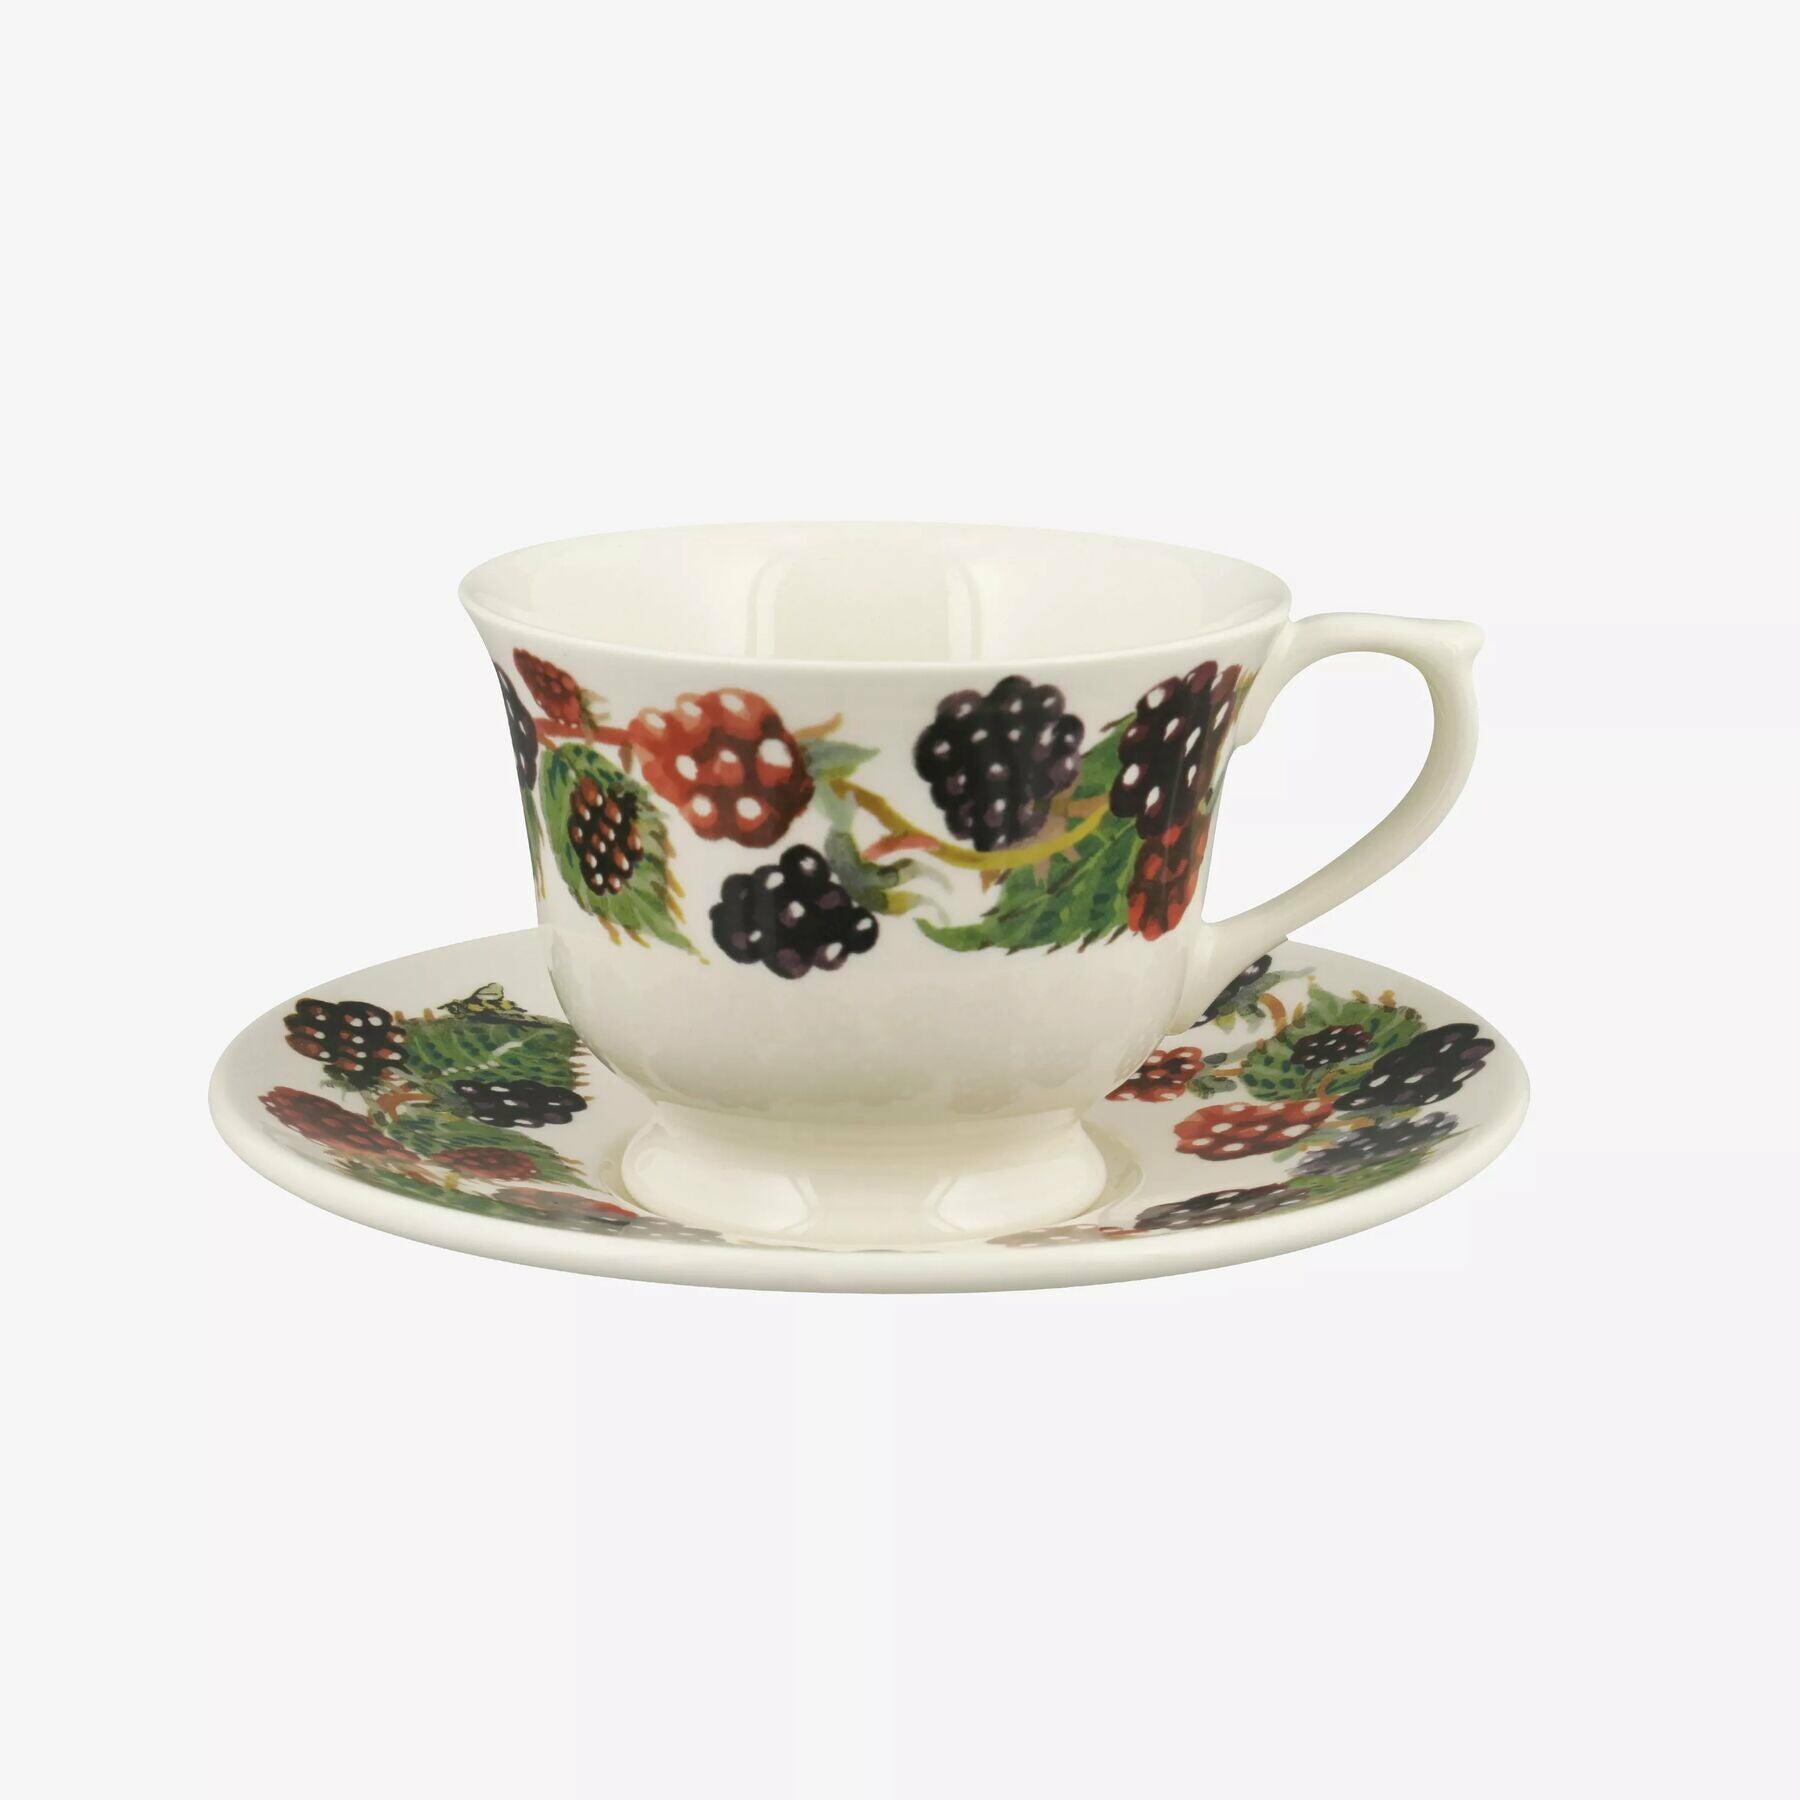 Blackberry Small Teacup & Saucer - Unique Handmade & Handpainted English Earthenware Vintage Style Teacup & Saucer  | Emma Bridgewater